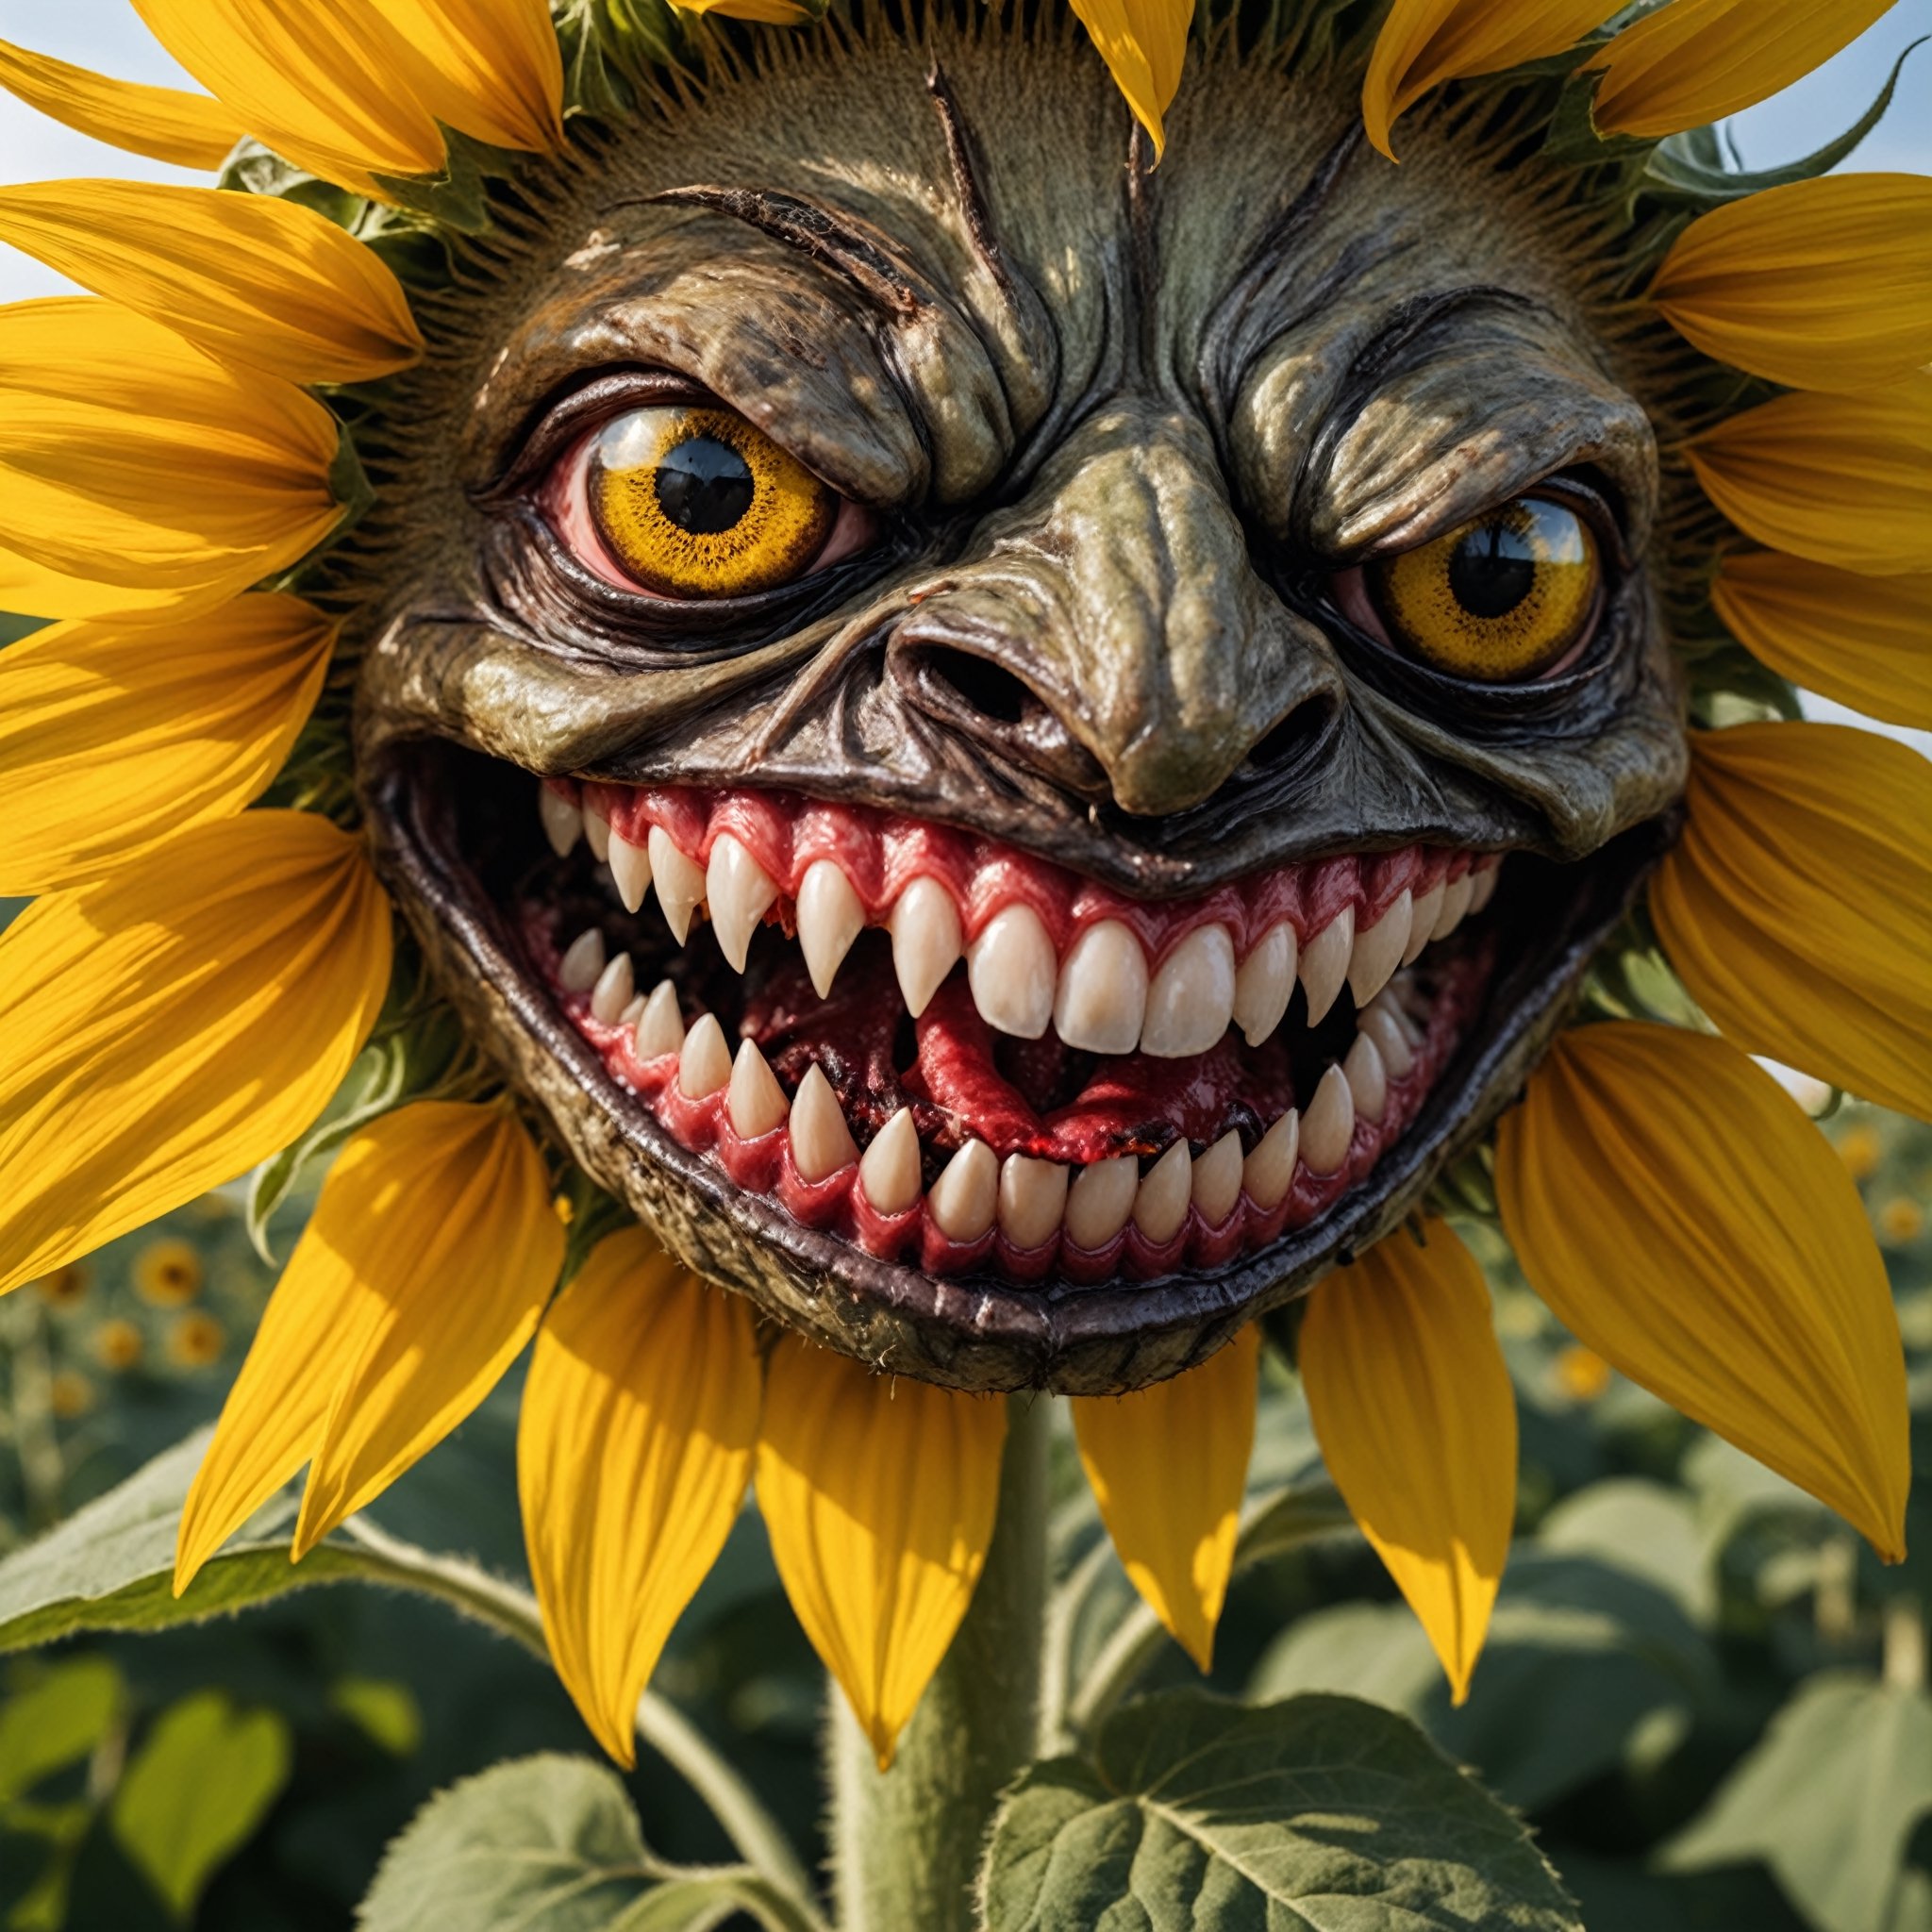 Detailed  closeup photo, of flesh eating sunflower ,evil eyes, fangs, natural light, summer Field background 